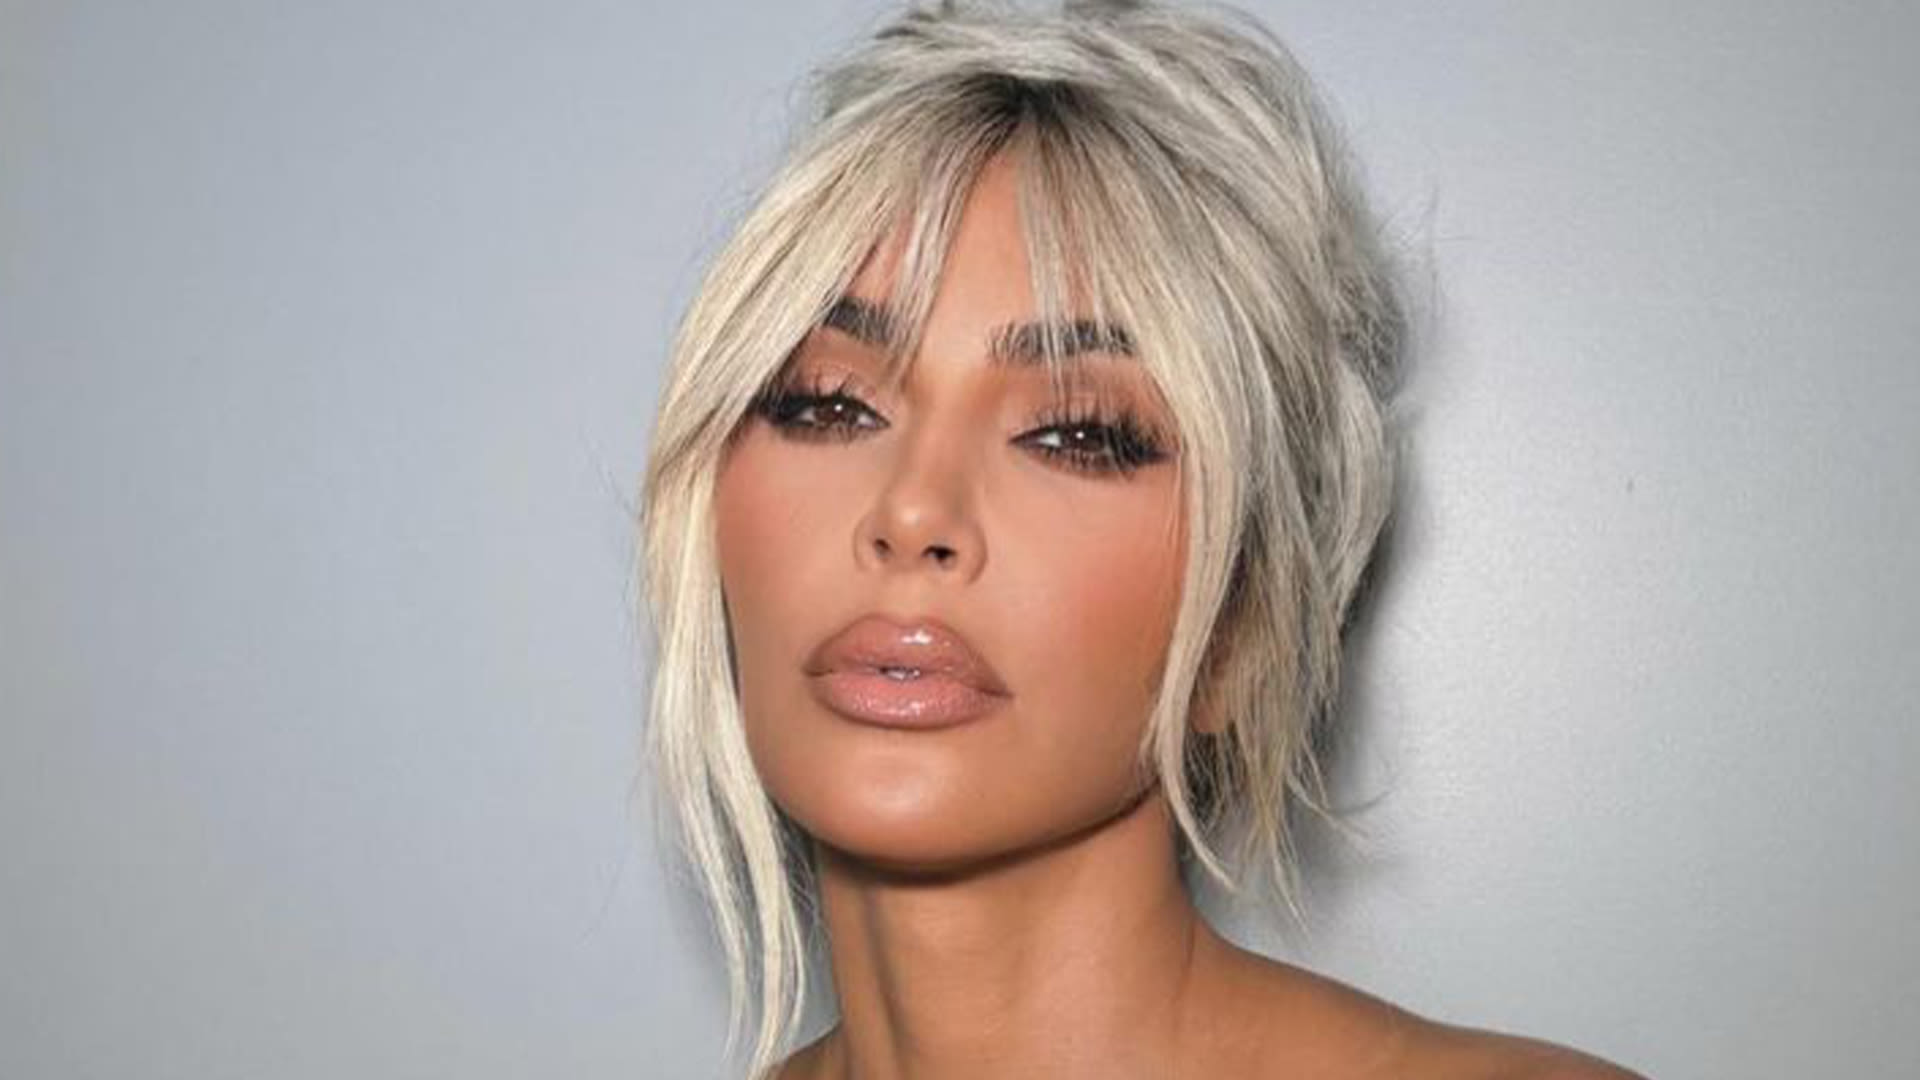 Kim Kardashian debuts even blonder new hair - but fans say she 'looks way older'